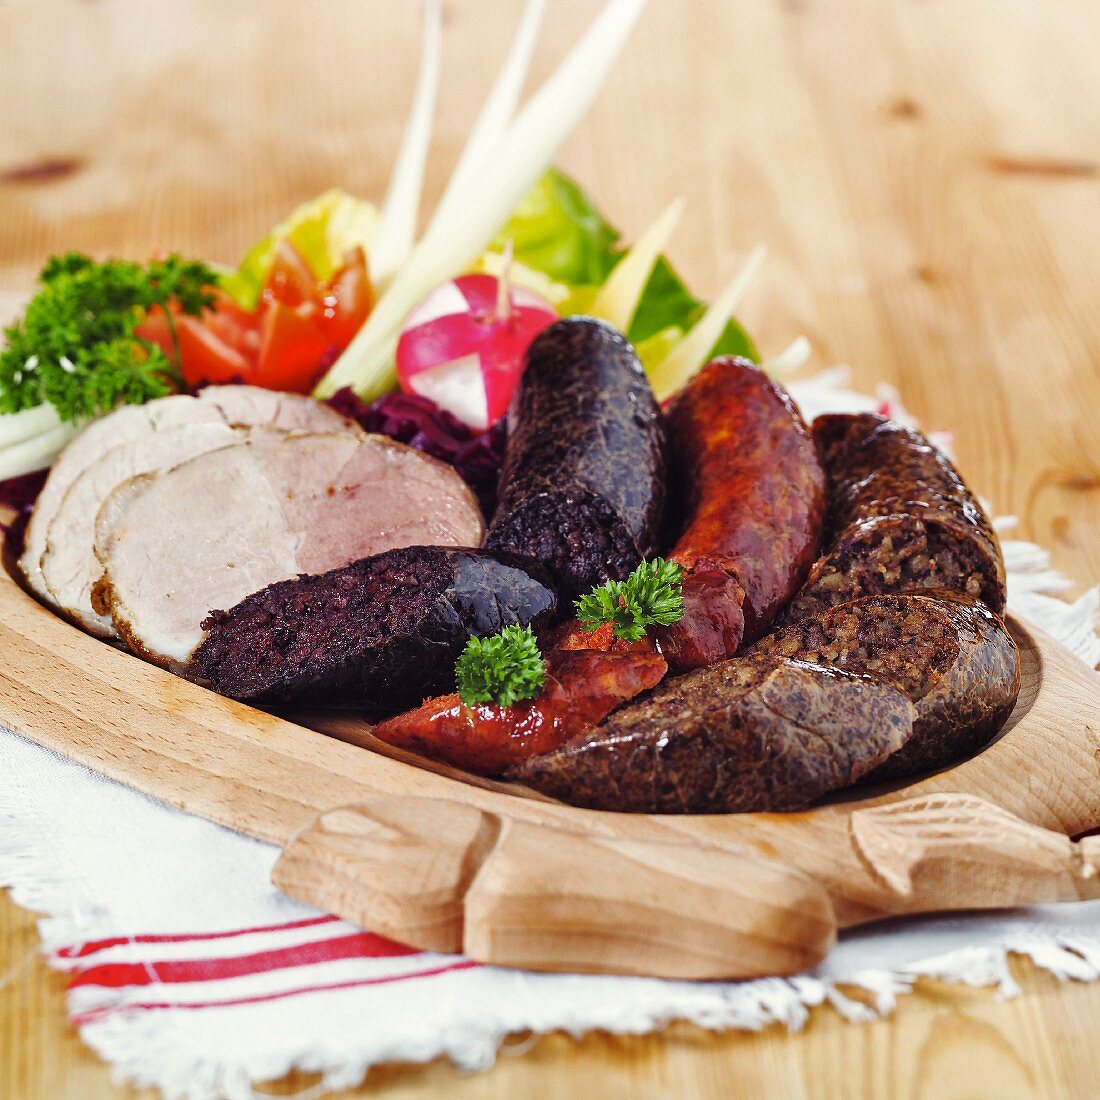 Hungarian meat platter